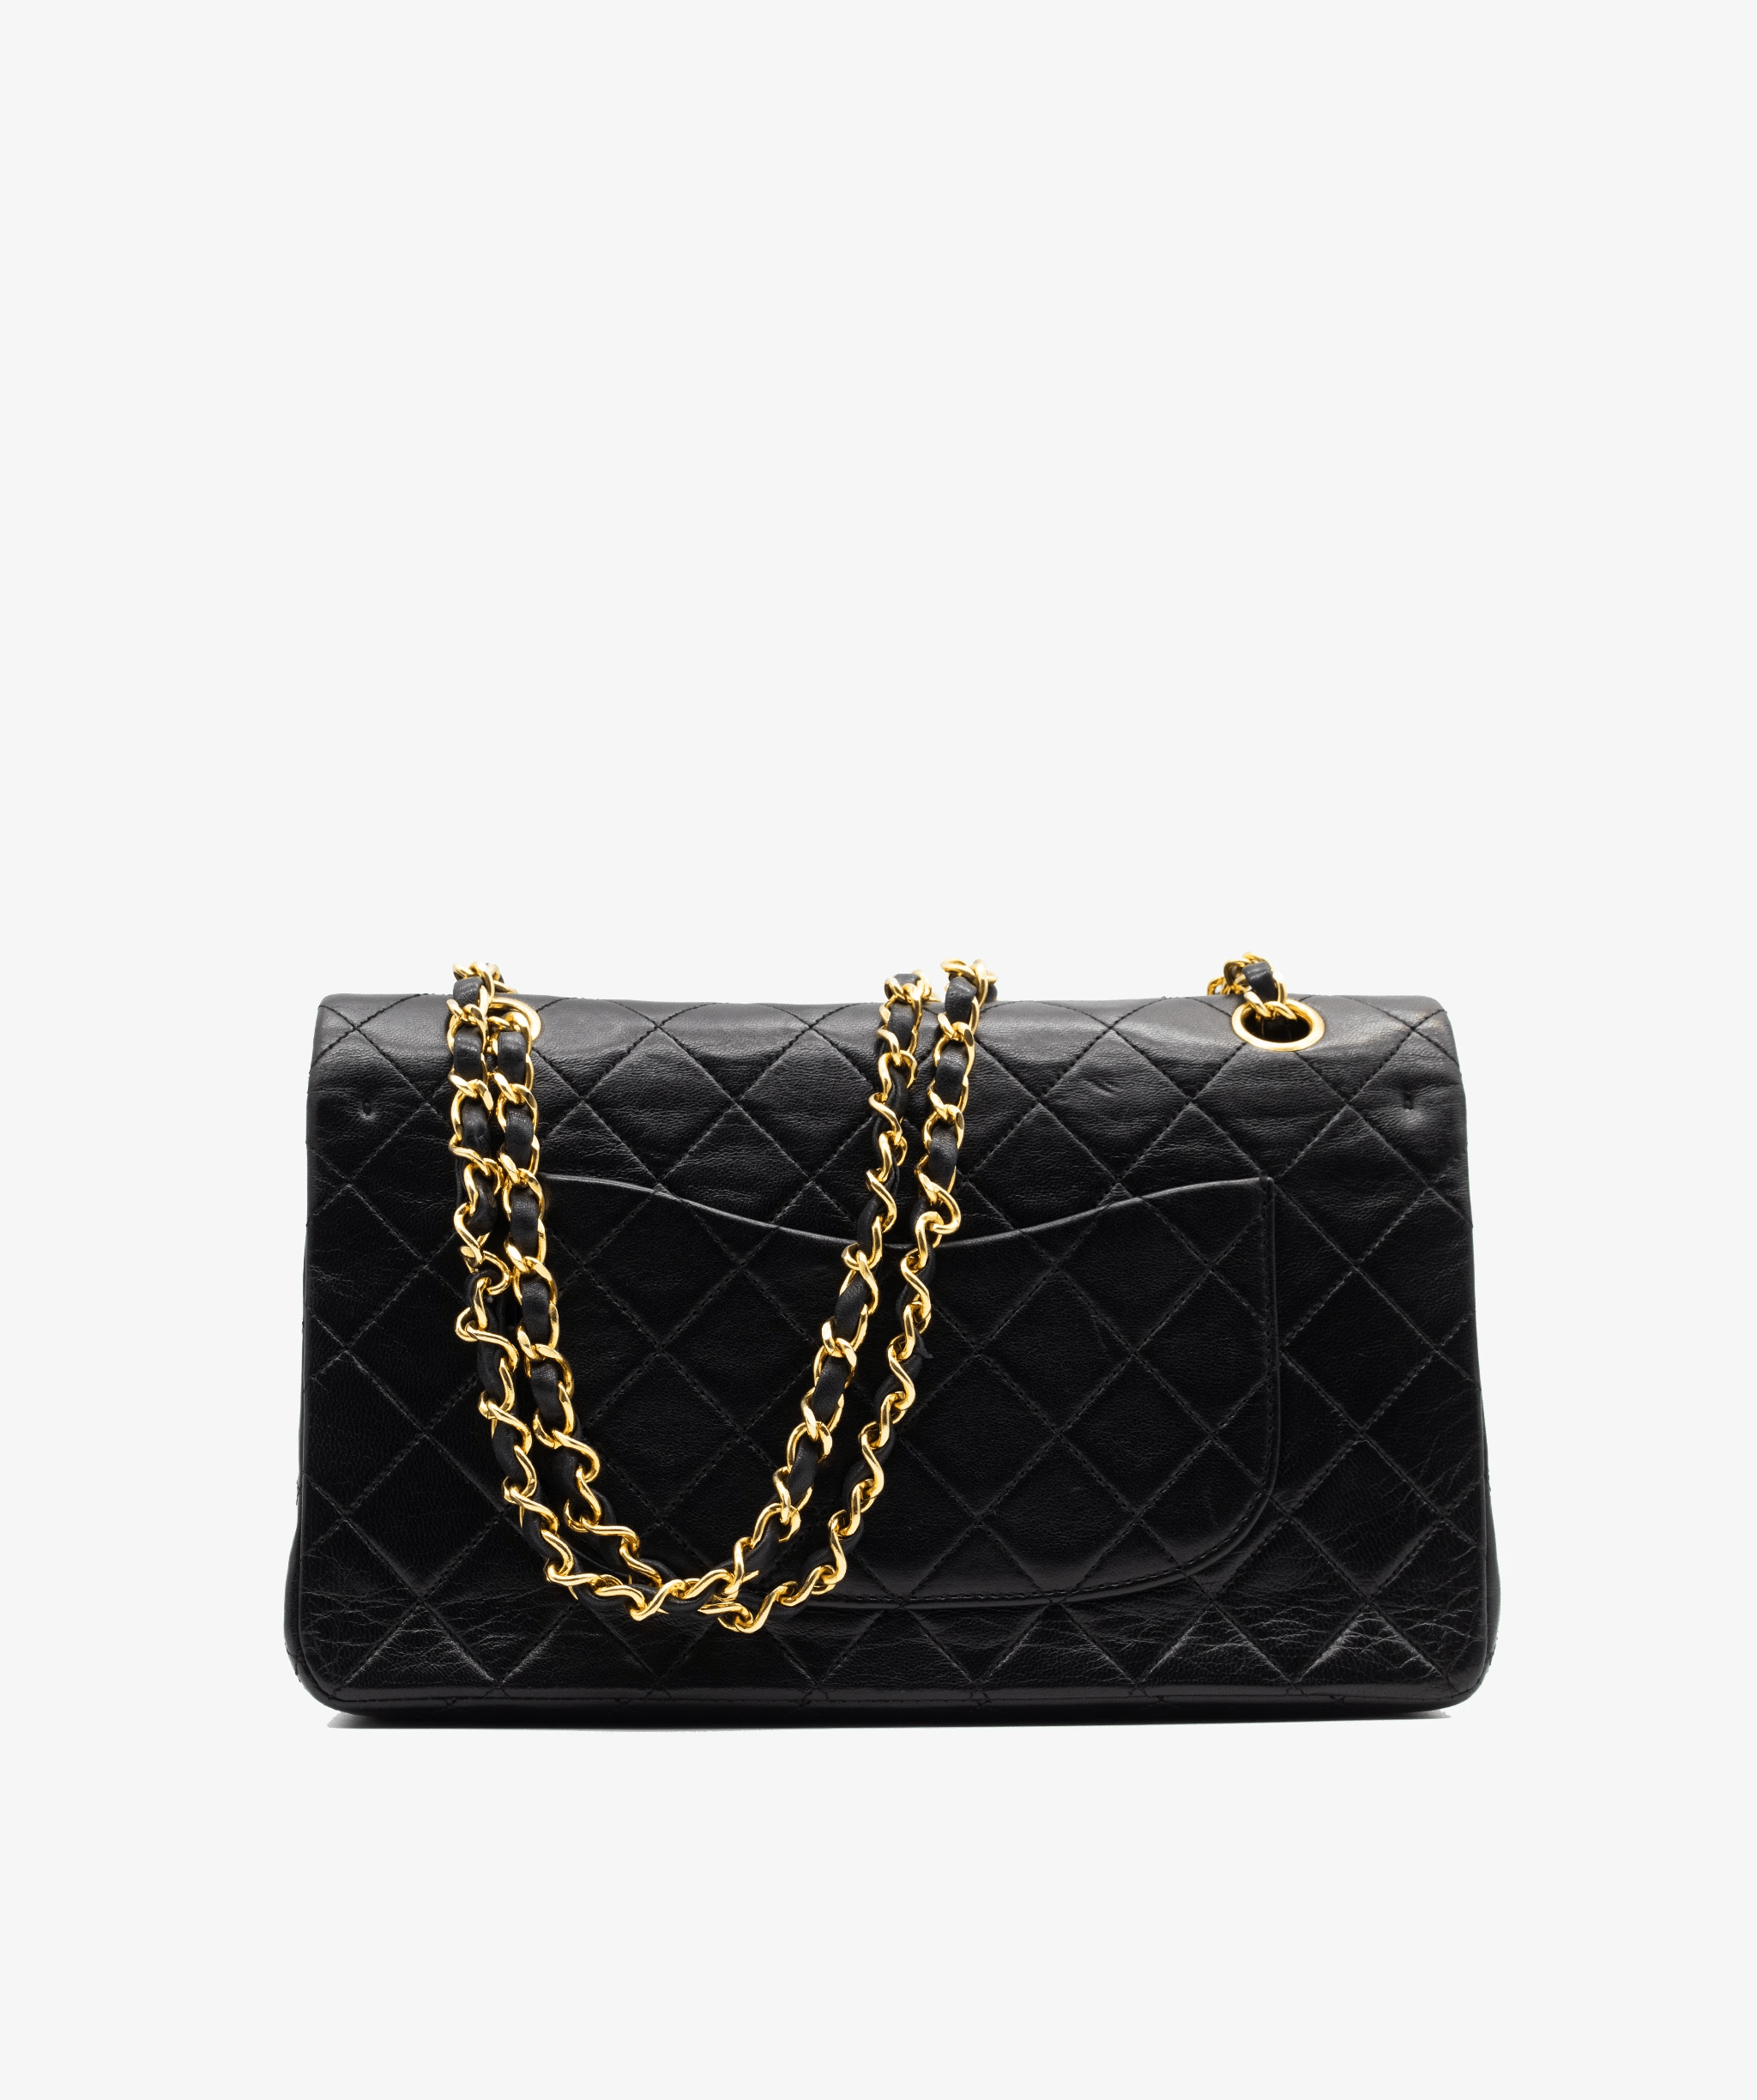 Chanel Chanel Classic Black Medium Flap bag